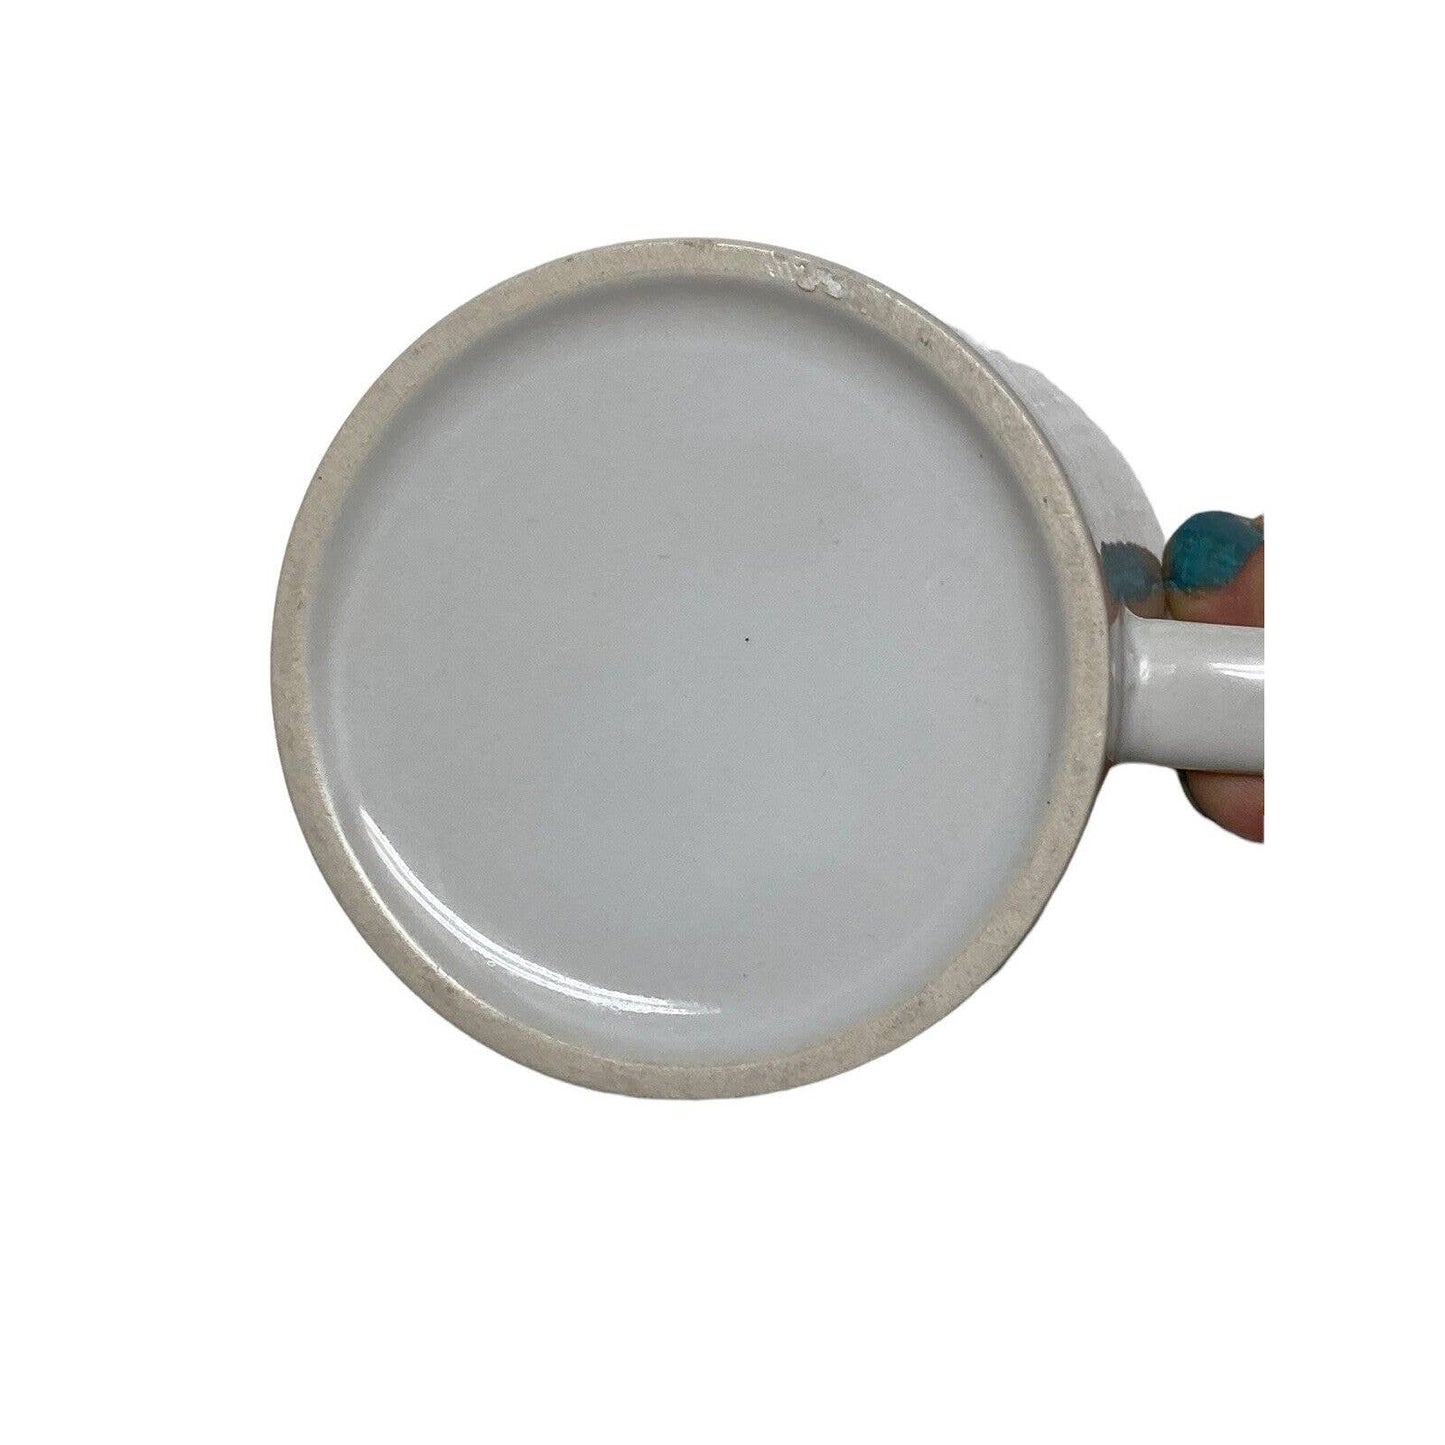 Keep Calm And Enjoy Being Retired White Coffee Tea Mug Cup